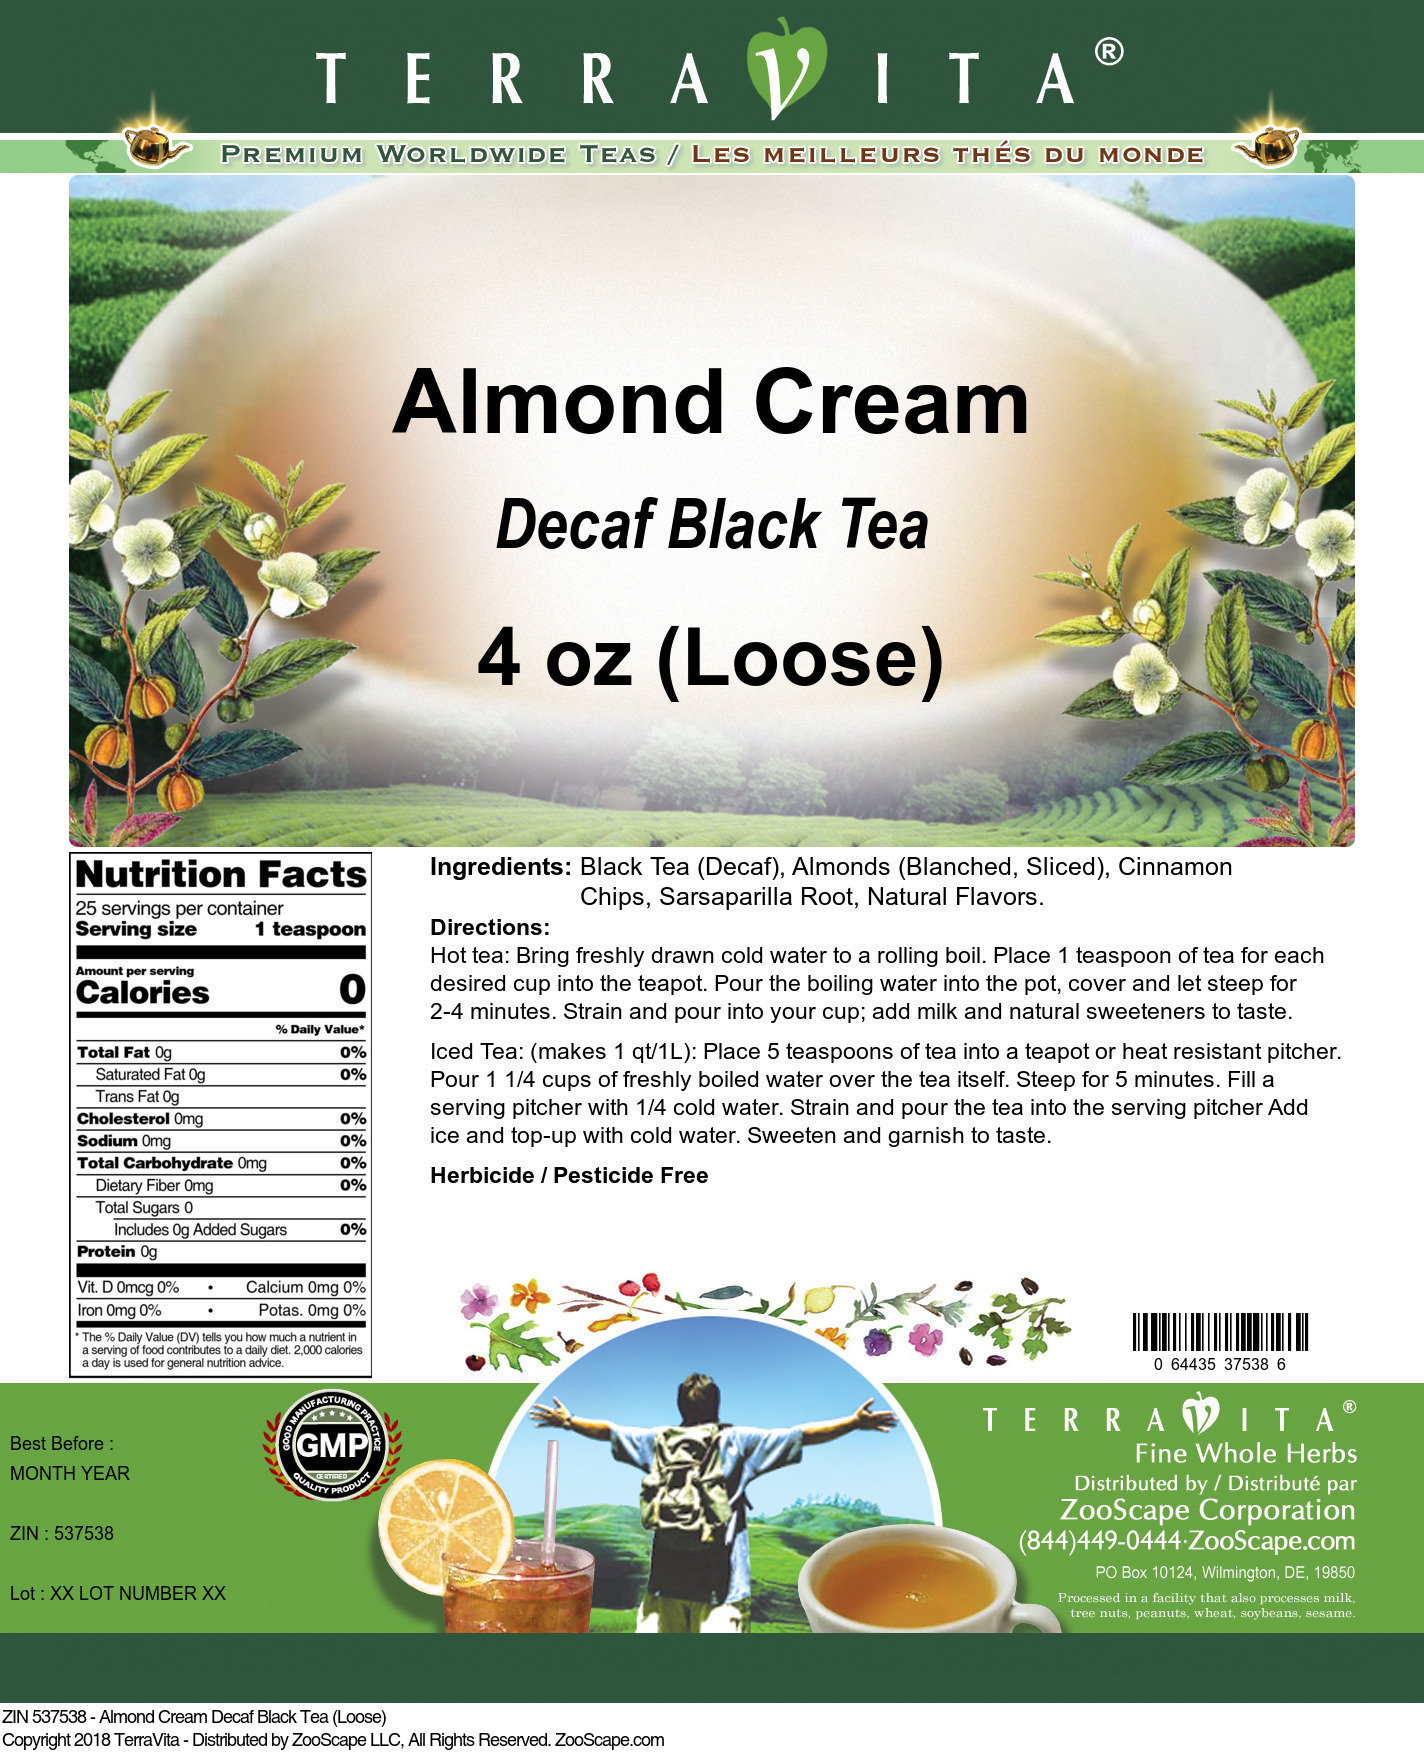 Almond Cream Decaf Black Tea (Loose) - Label